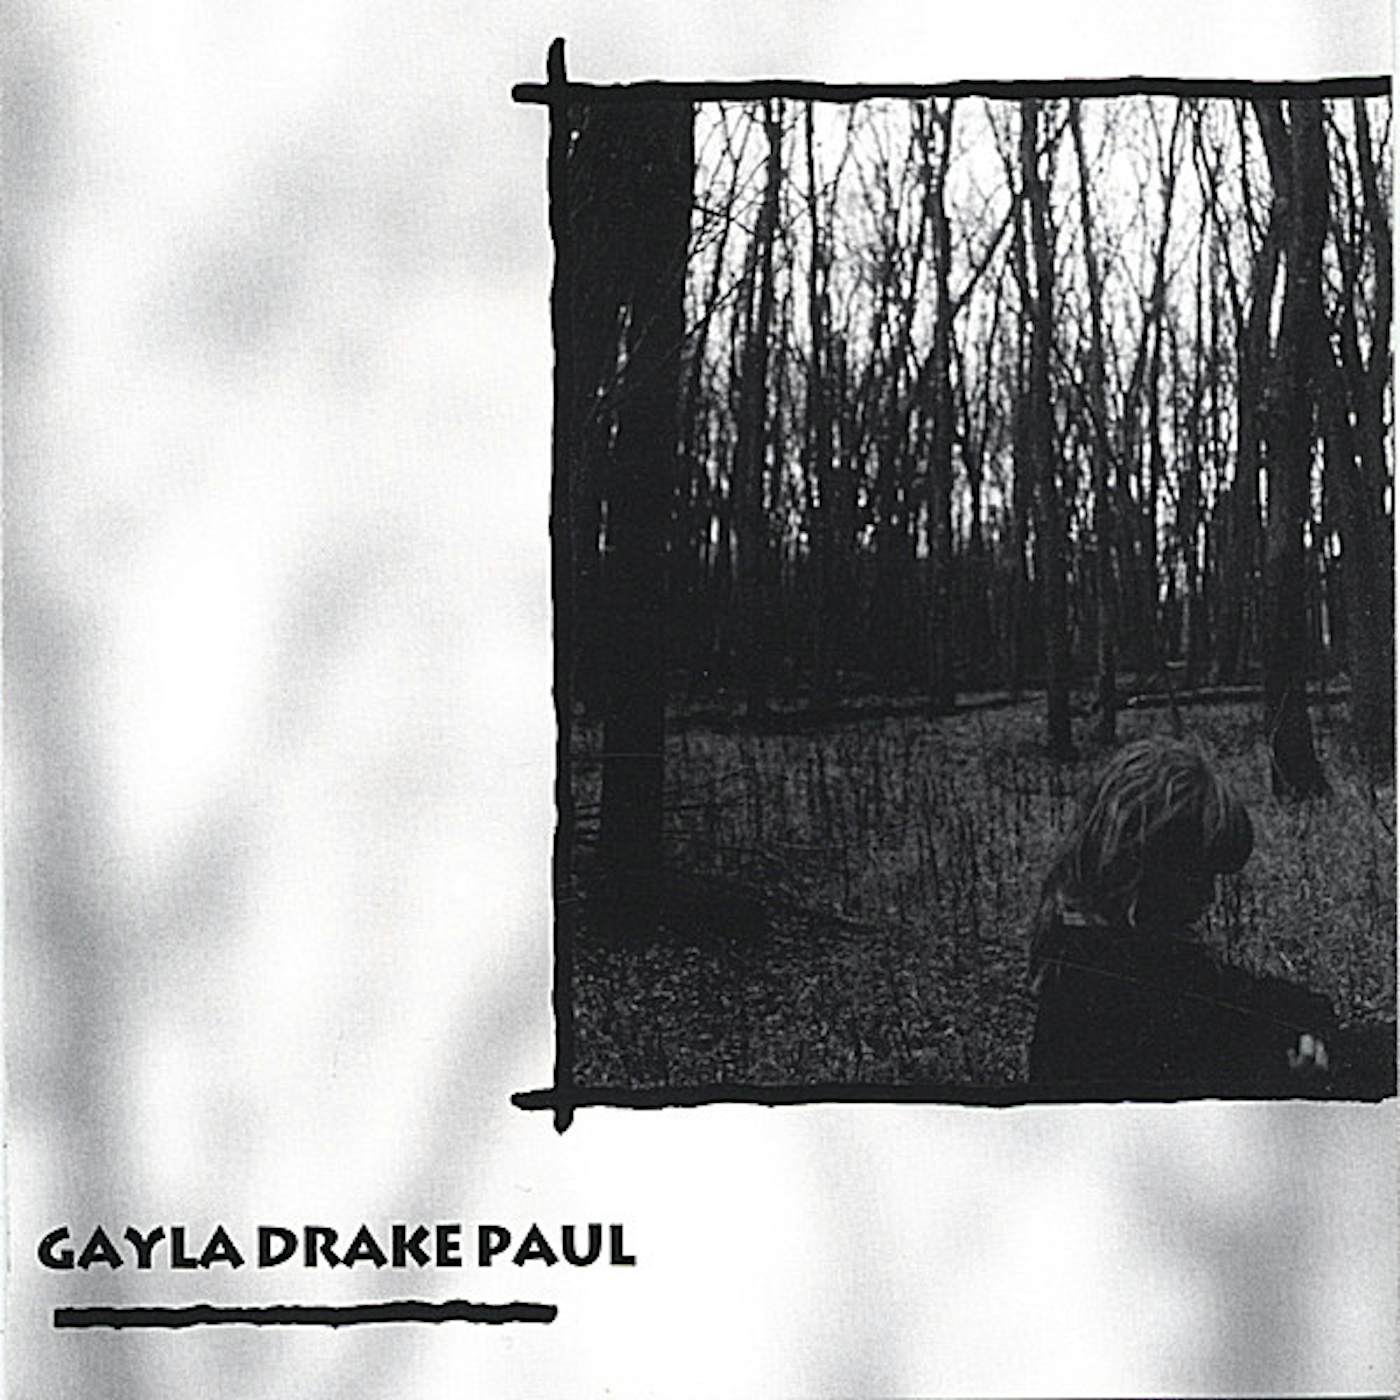 Gayla Drake Paul GDP CD